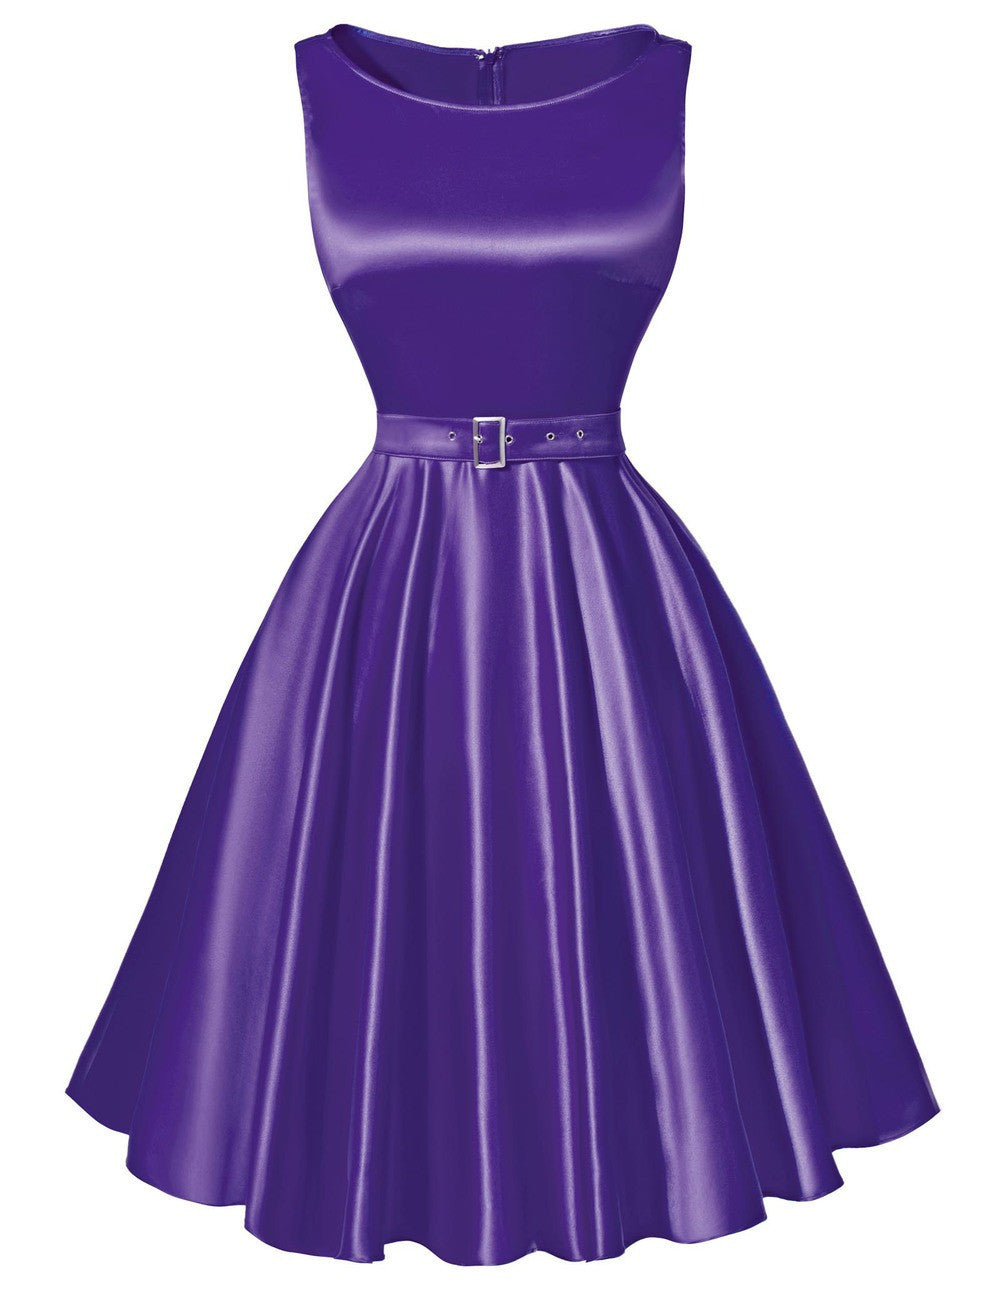 Online discount shop Australia - Jurken Women Dress Black Red Purple Summer Audrey Hepburn 50s 60s Vintage Dresses Vestidos Plus Size Rockabilly Party Dress